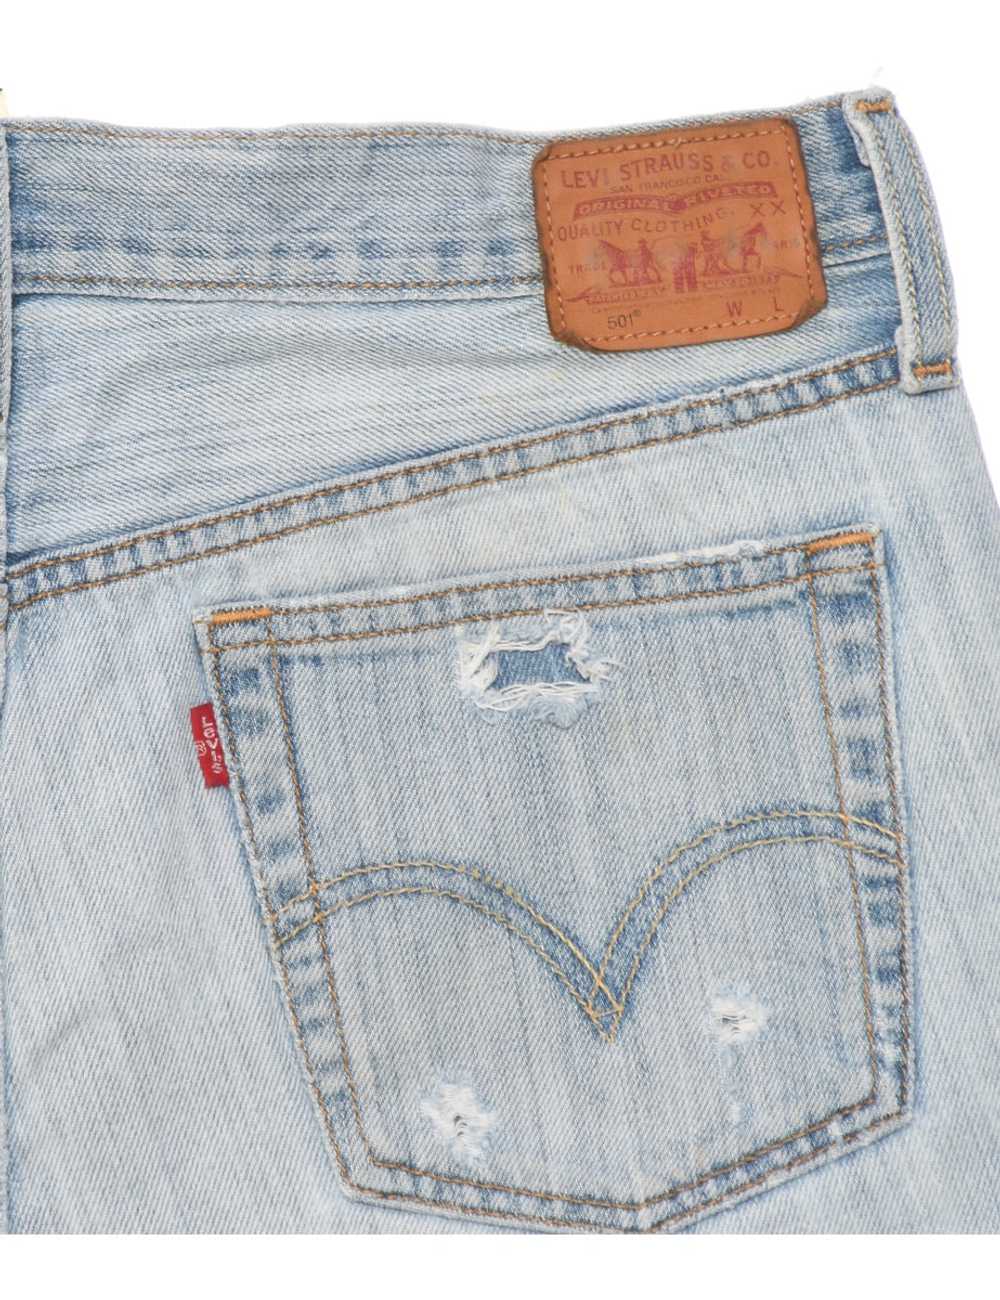 Levi's 501 Cut-off Denim Shorts - W31 L2 - image 4